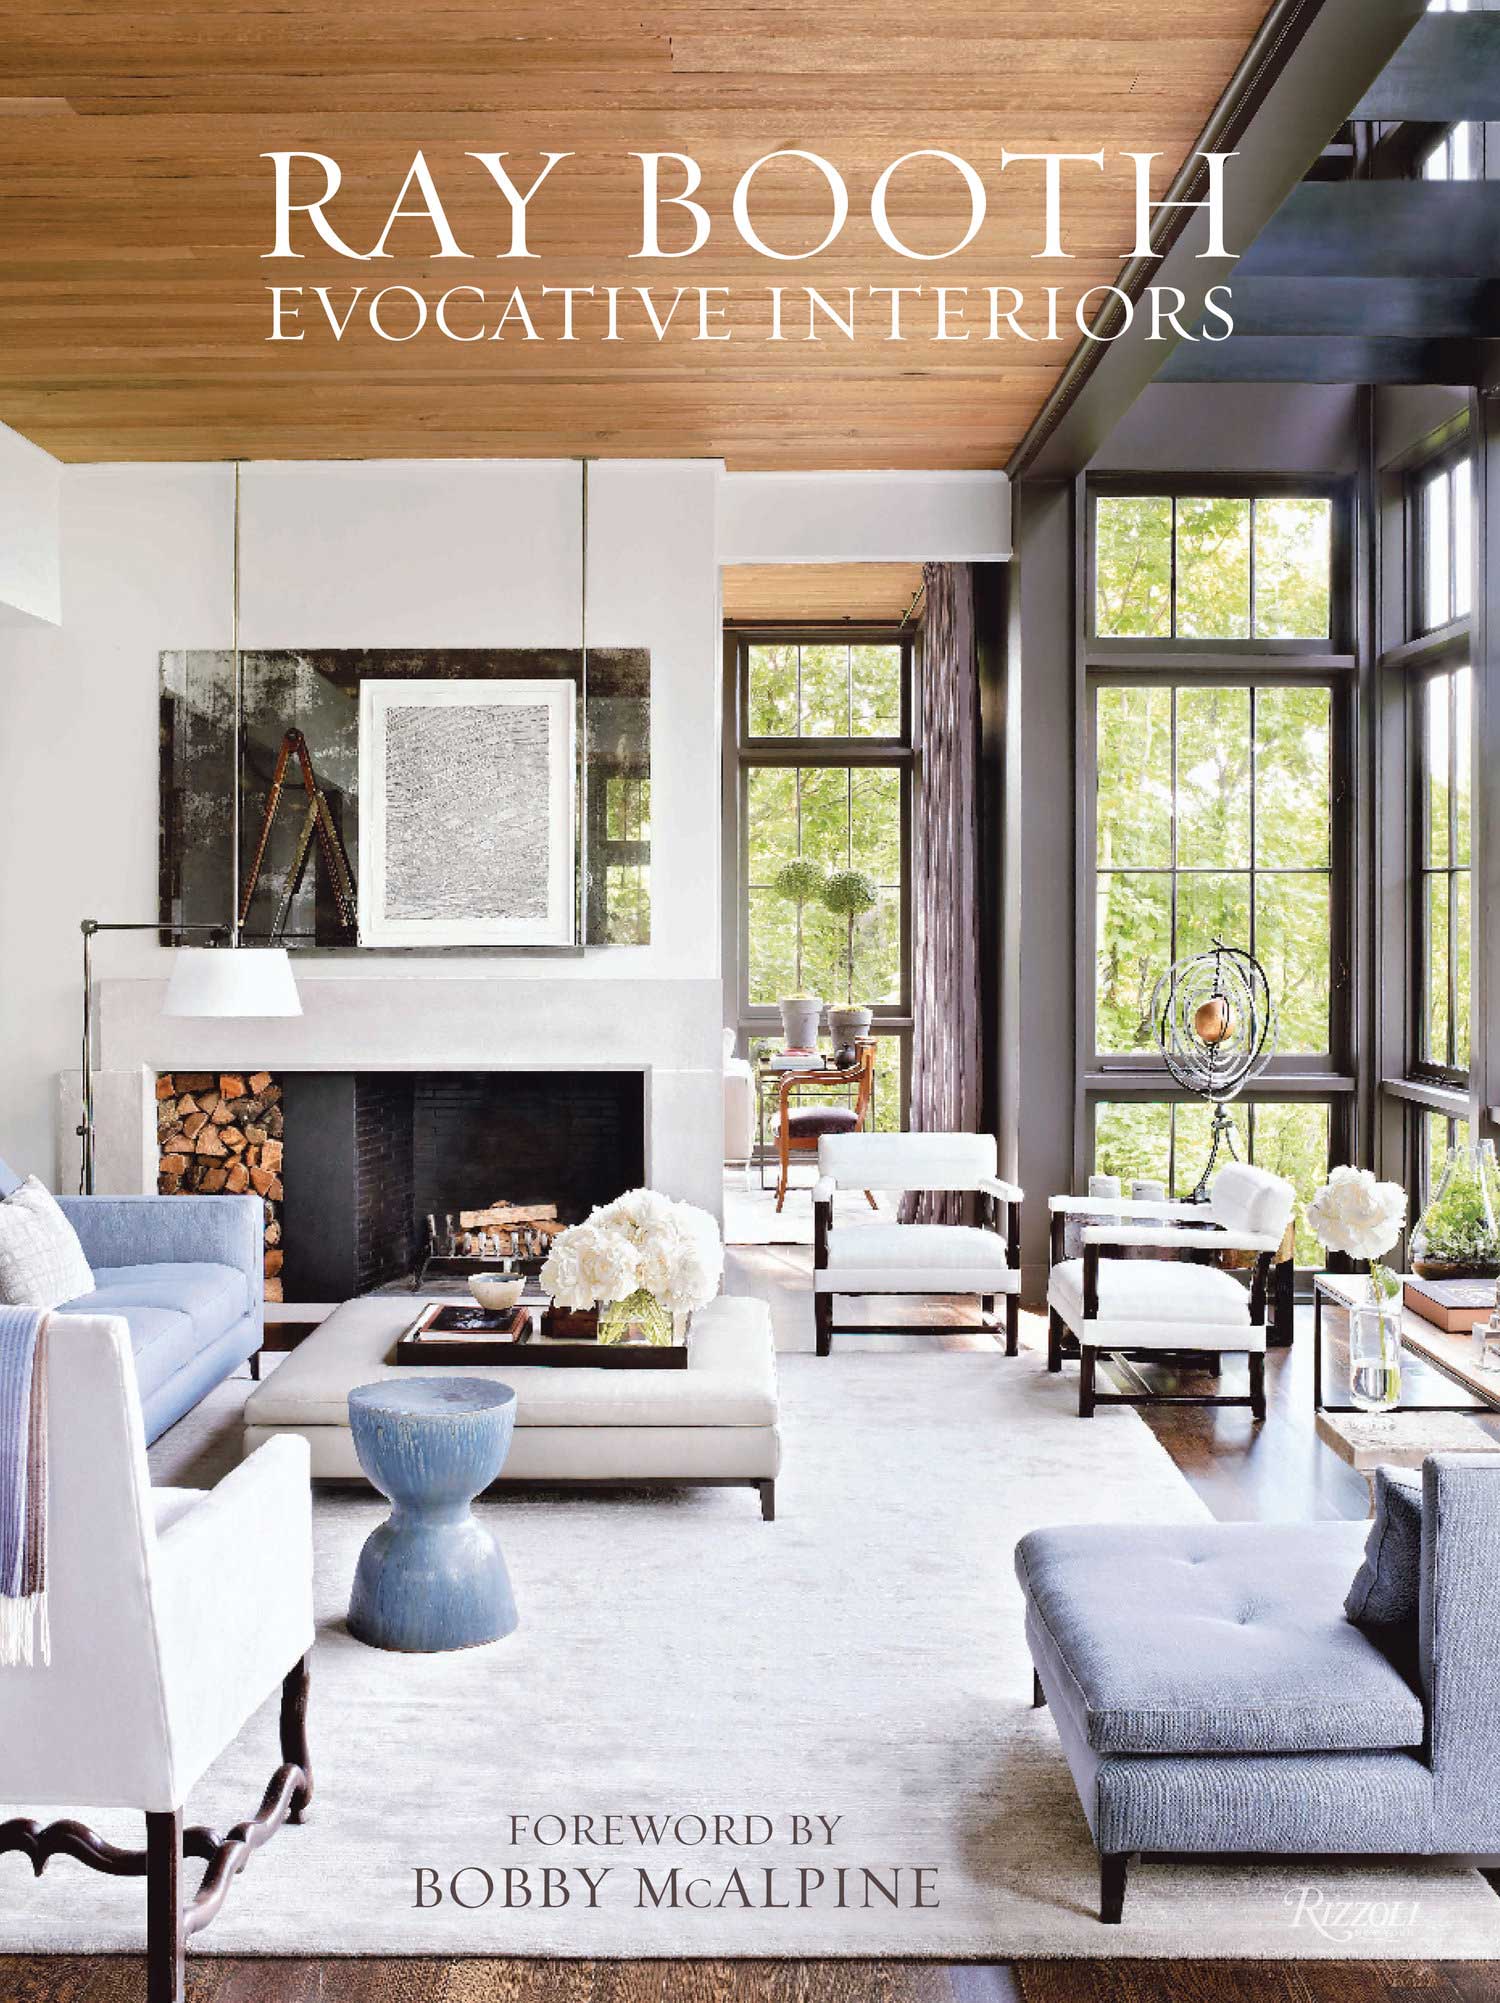 Evocative Interiors book cover